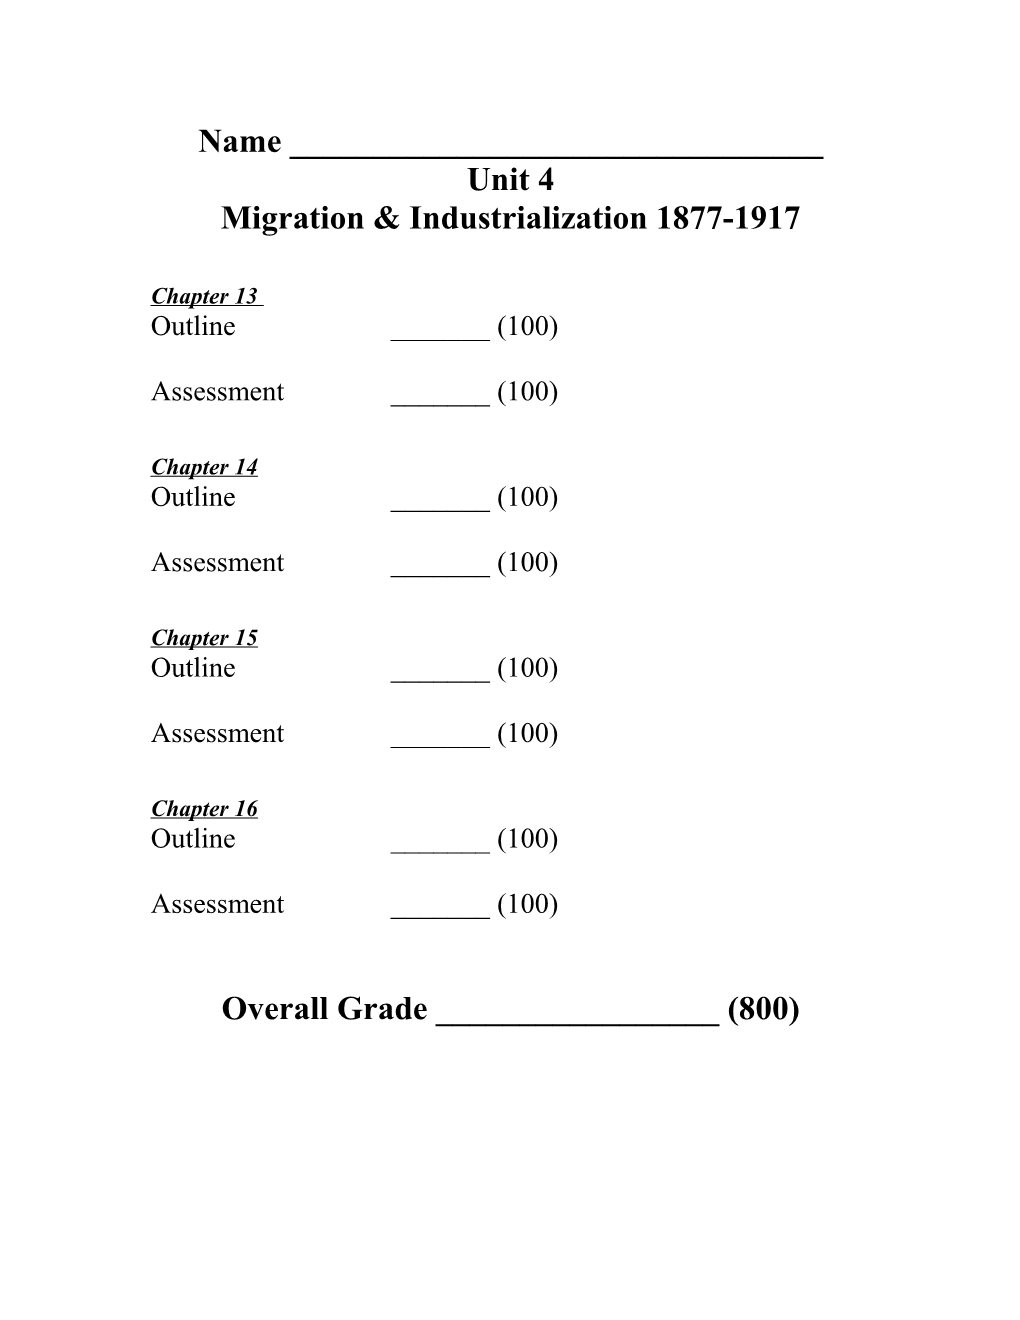 Migration & Industrialization 1877-1917